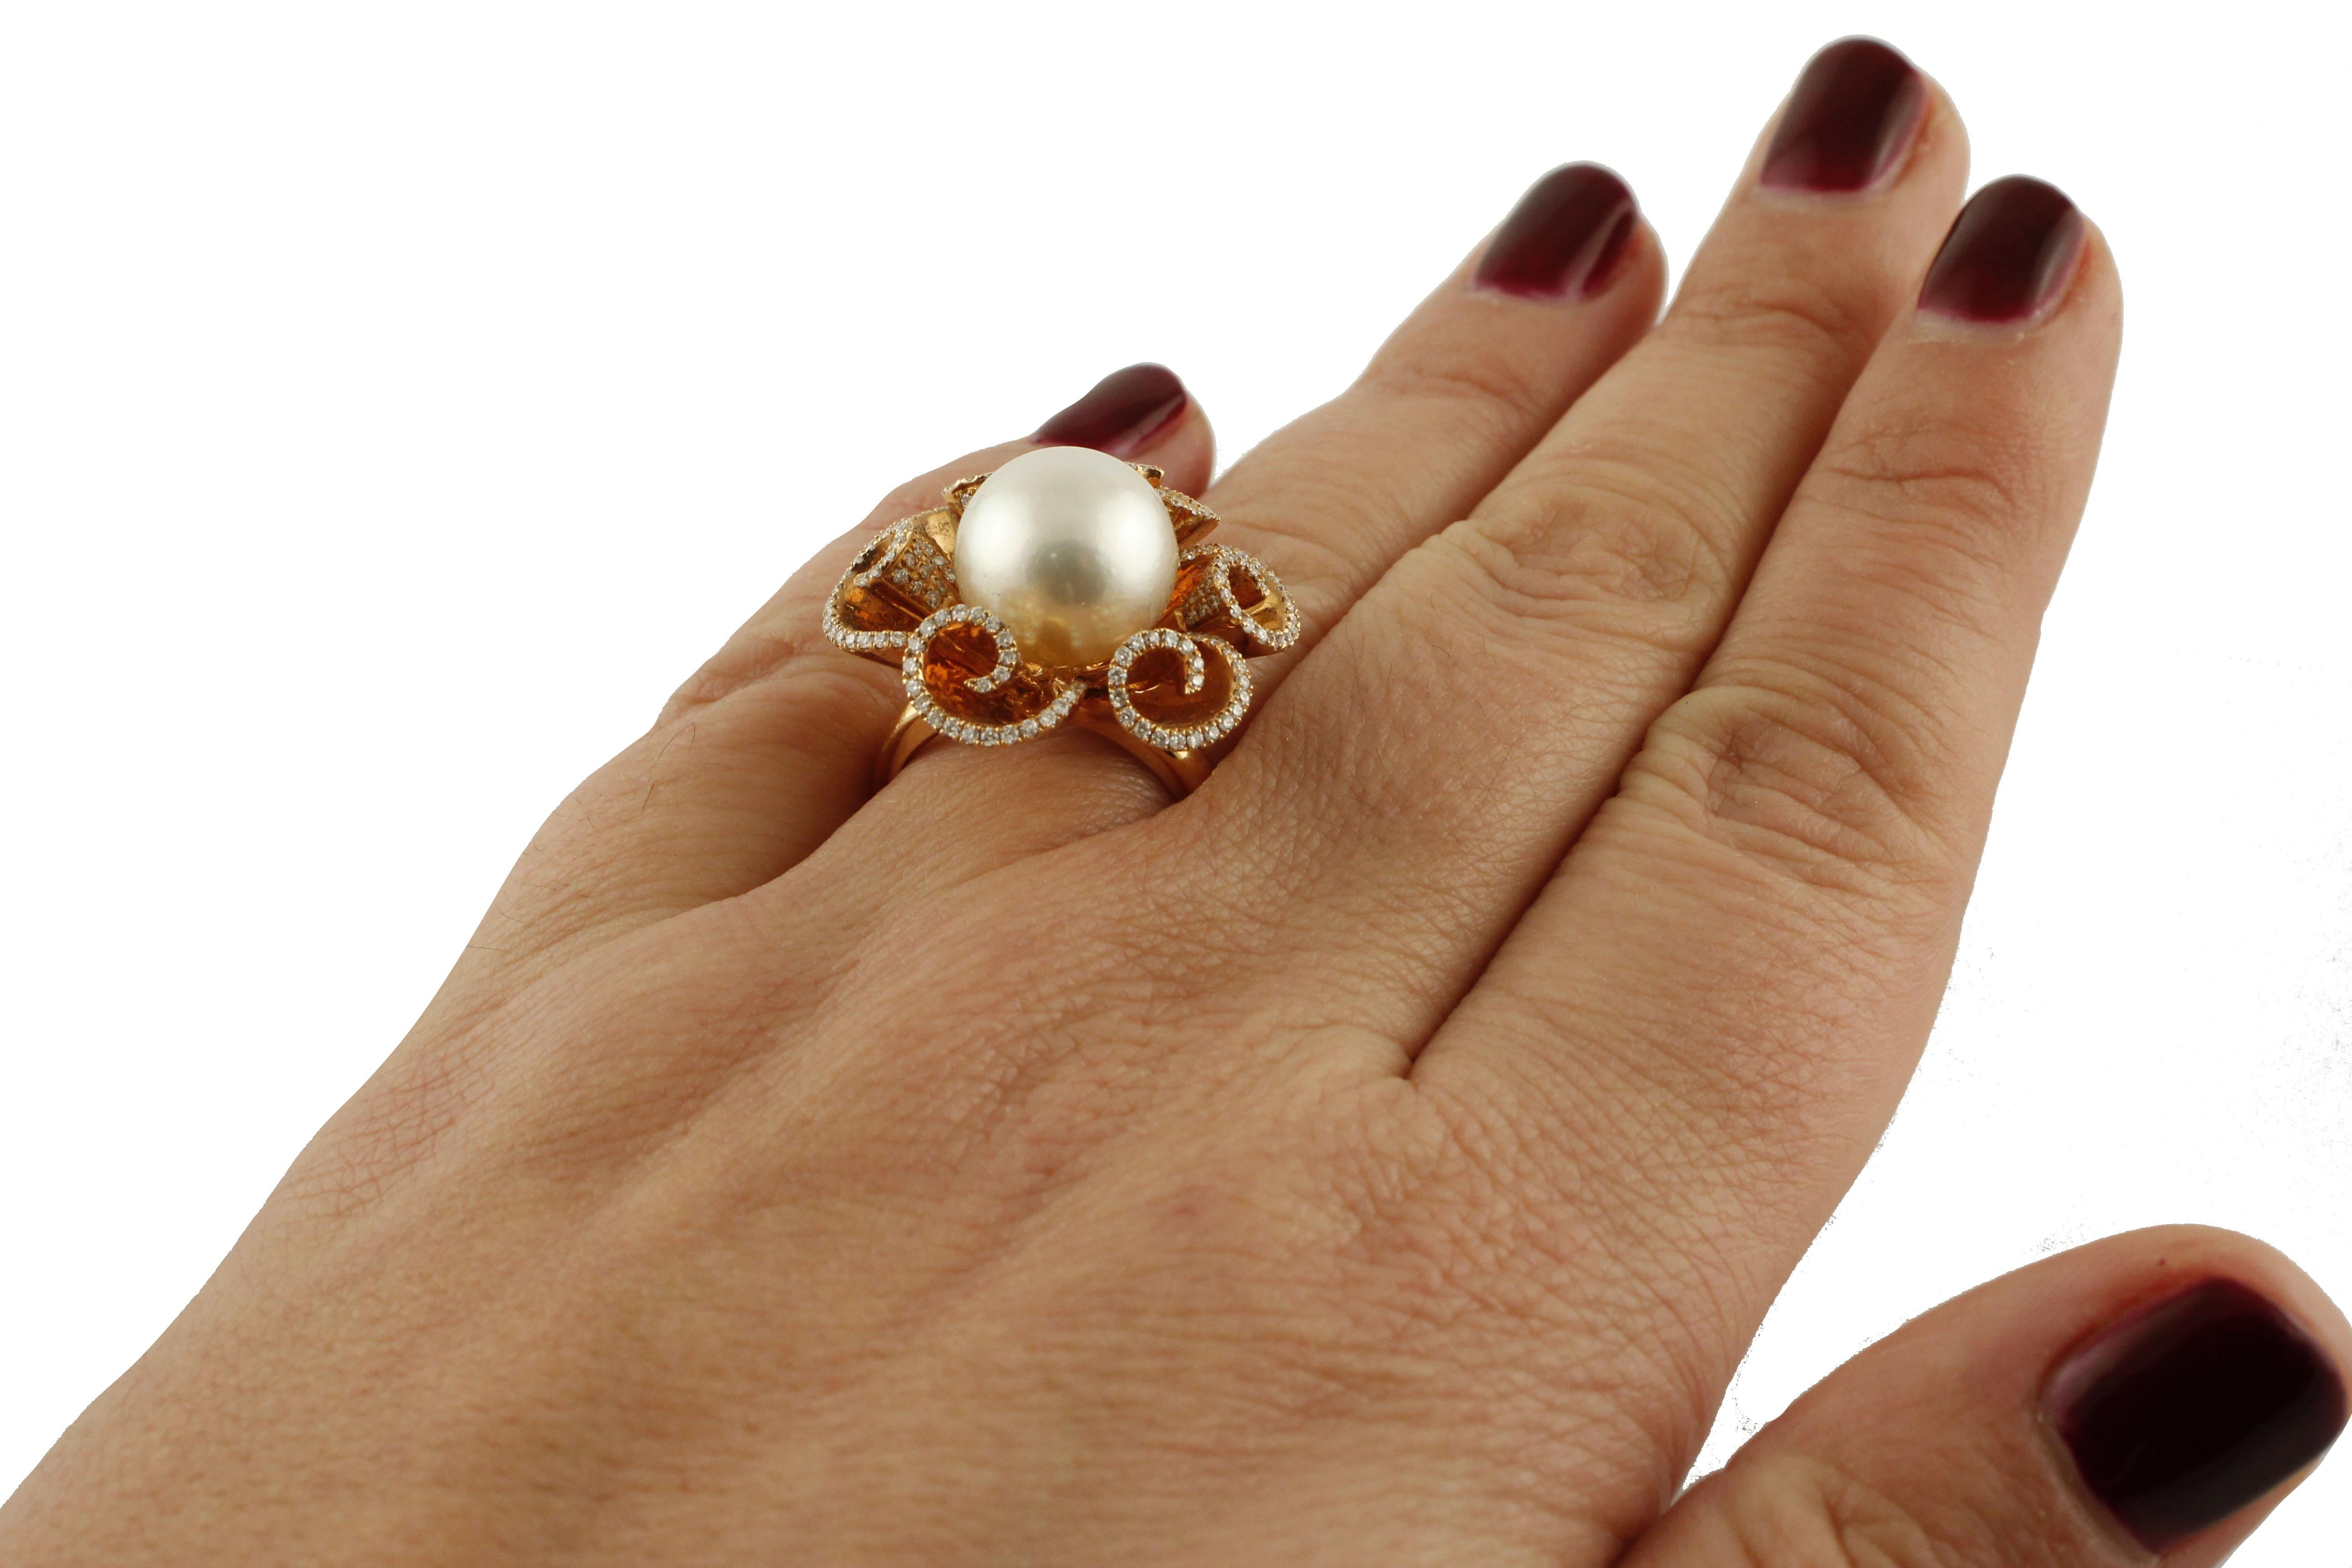  Gold Diamond Pearl Ring 1